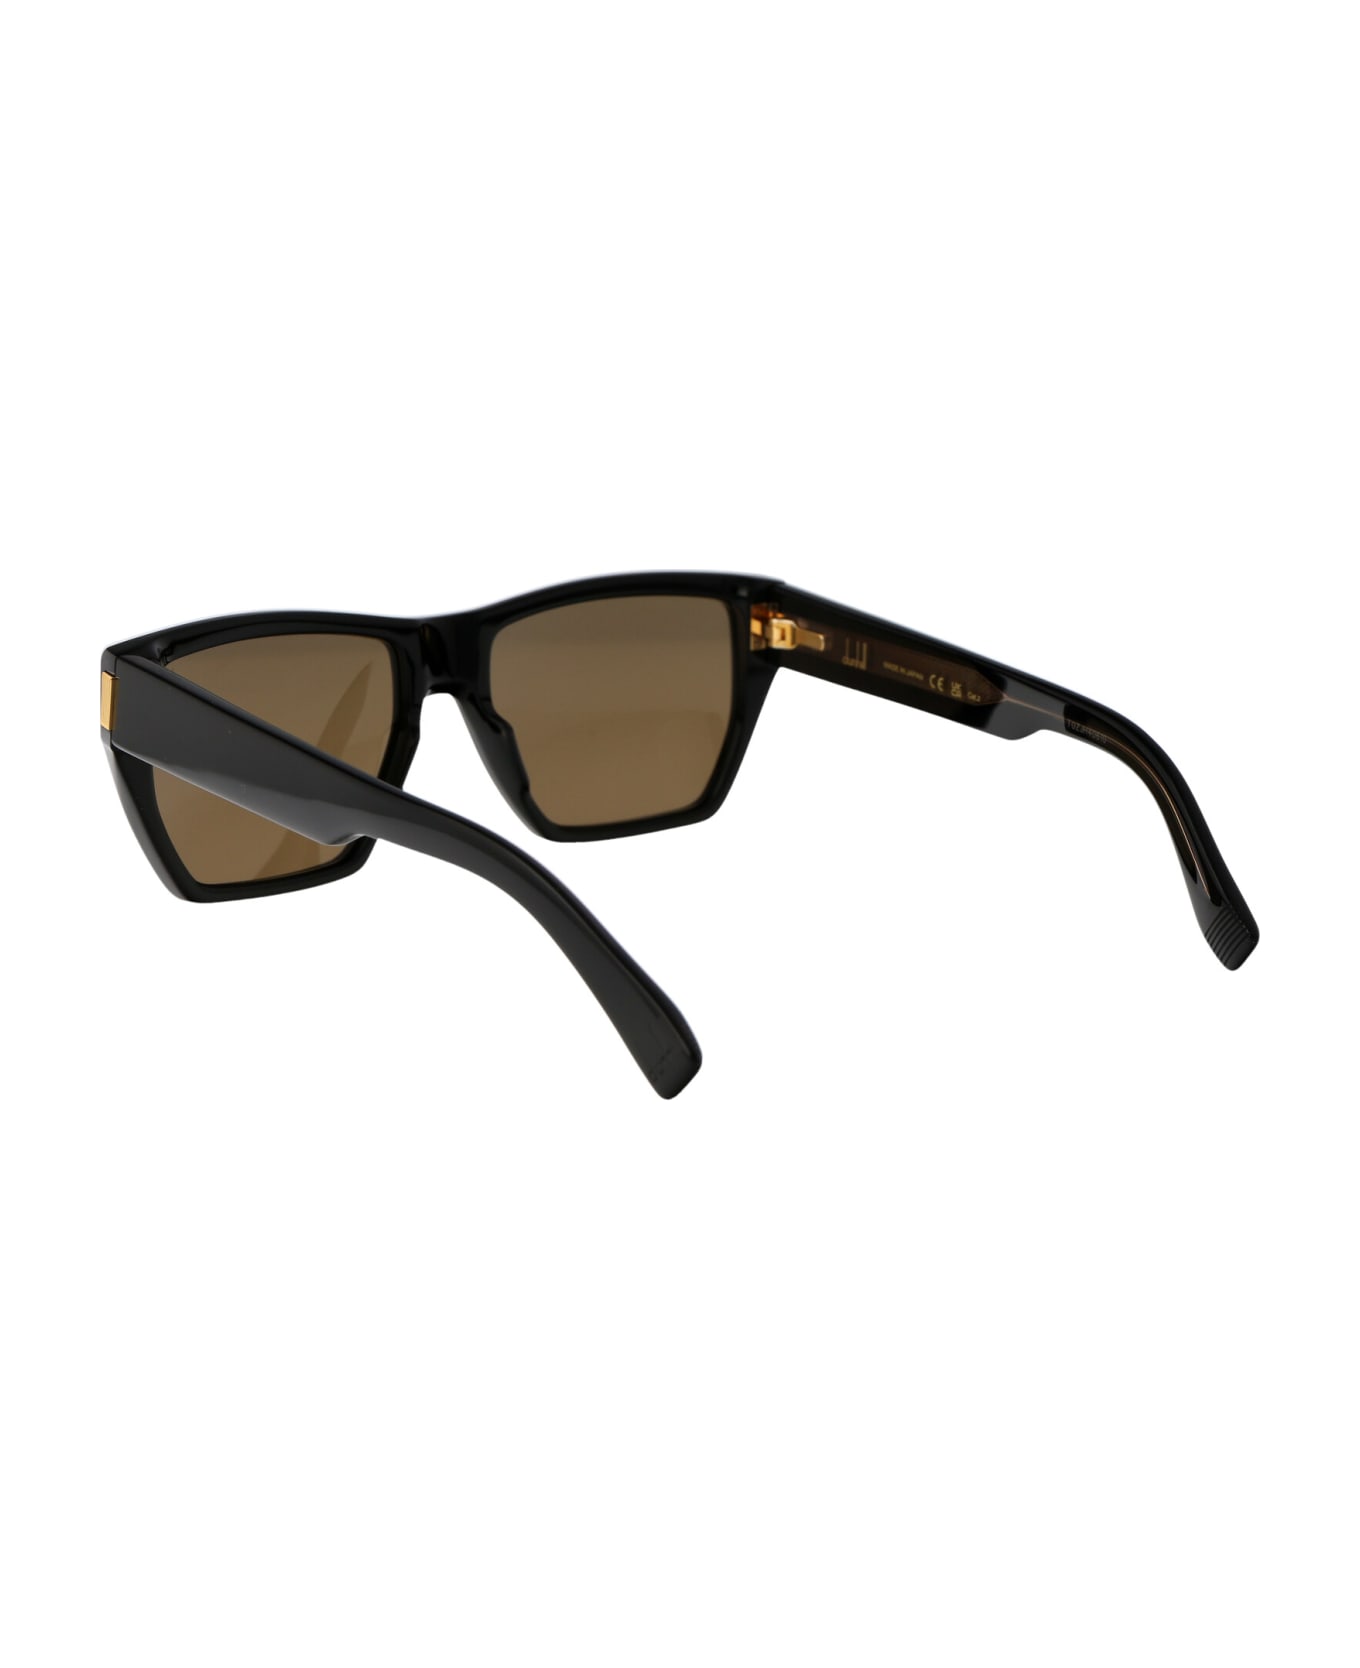 Dunhill Du0031s Sunglasses - 001 BLACK BLACK BROWN